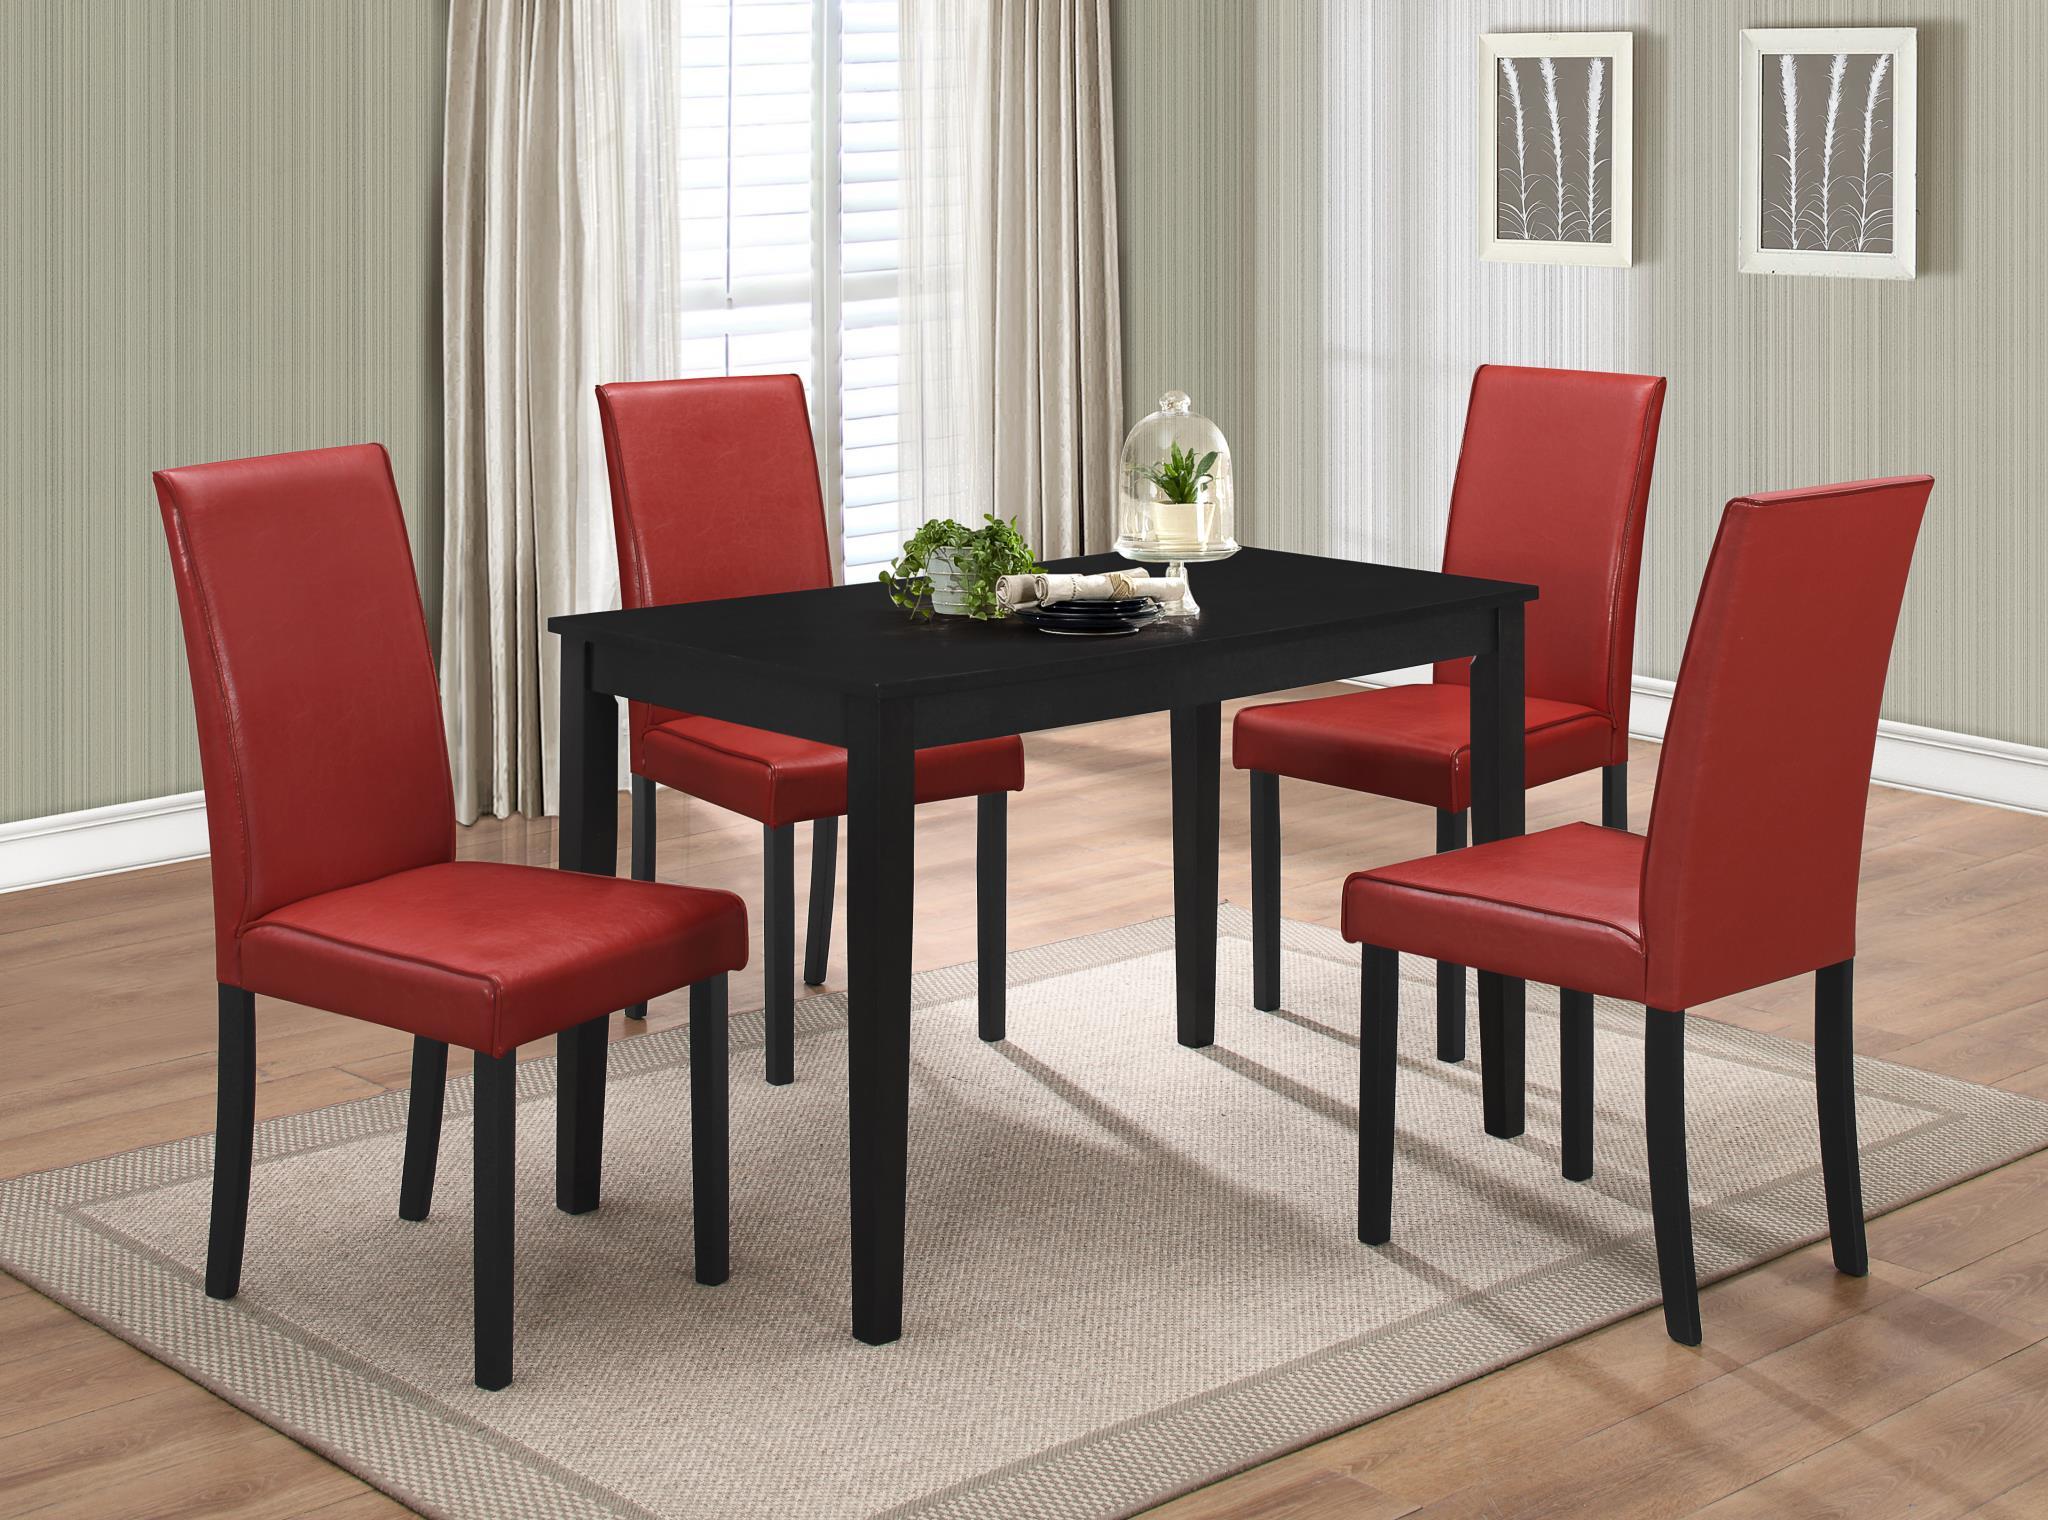 

    
MYCO Furniture Drake Rectangular Table & Red PU Chairs Dining Room Set 5Pcs
